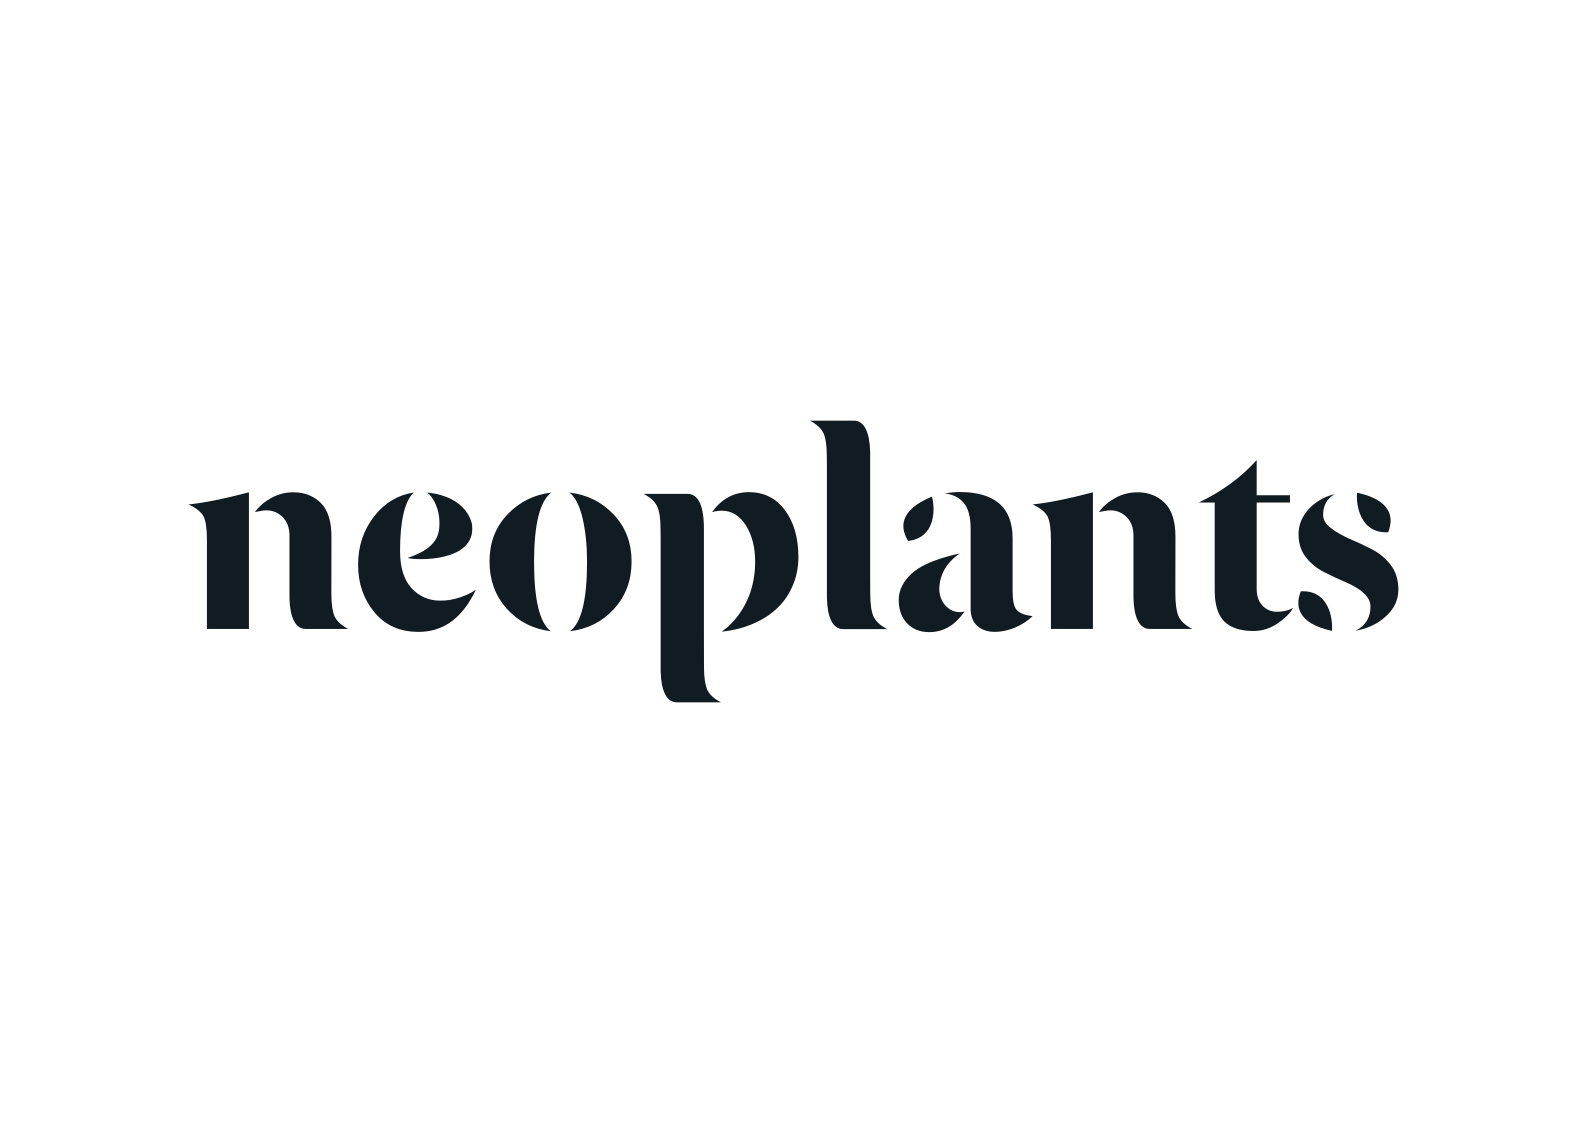 Neoplants